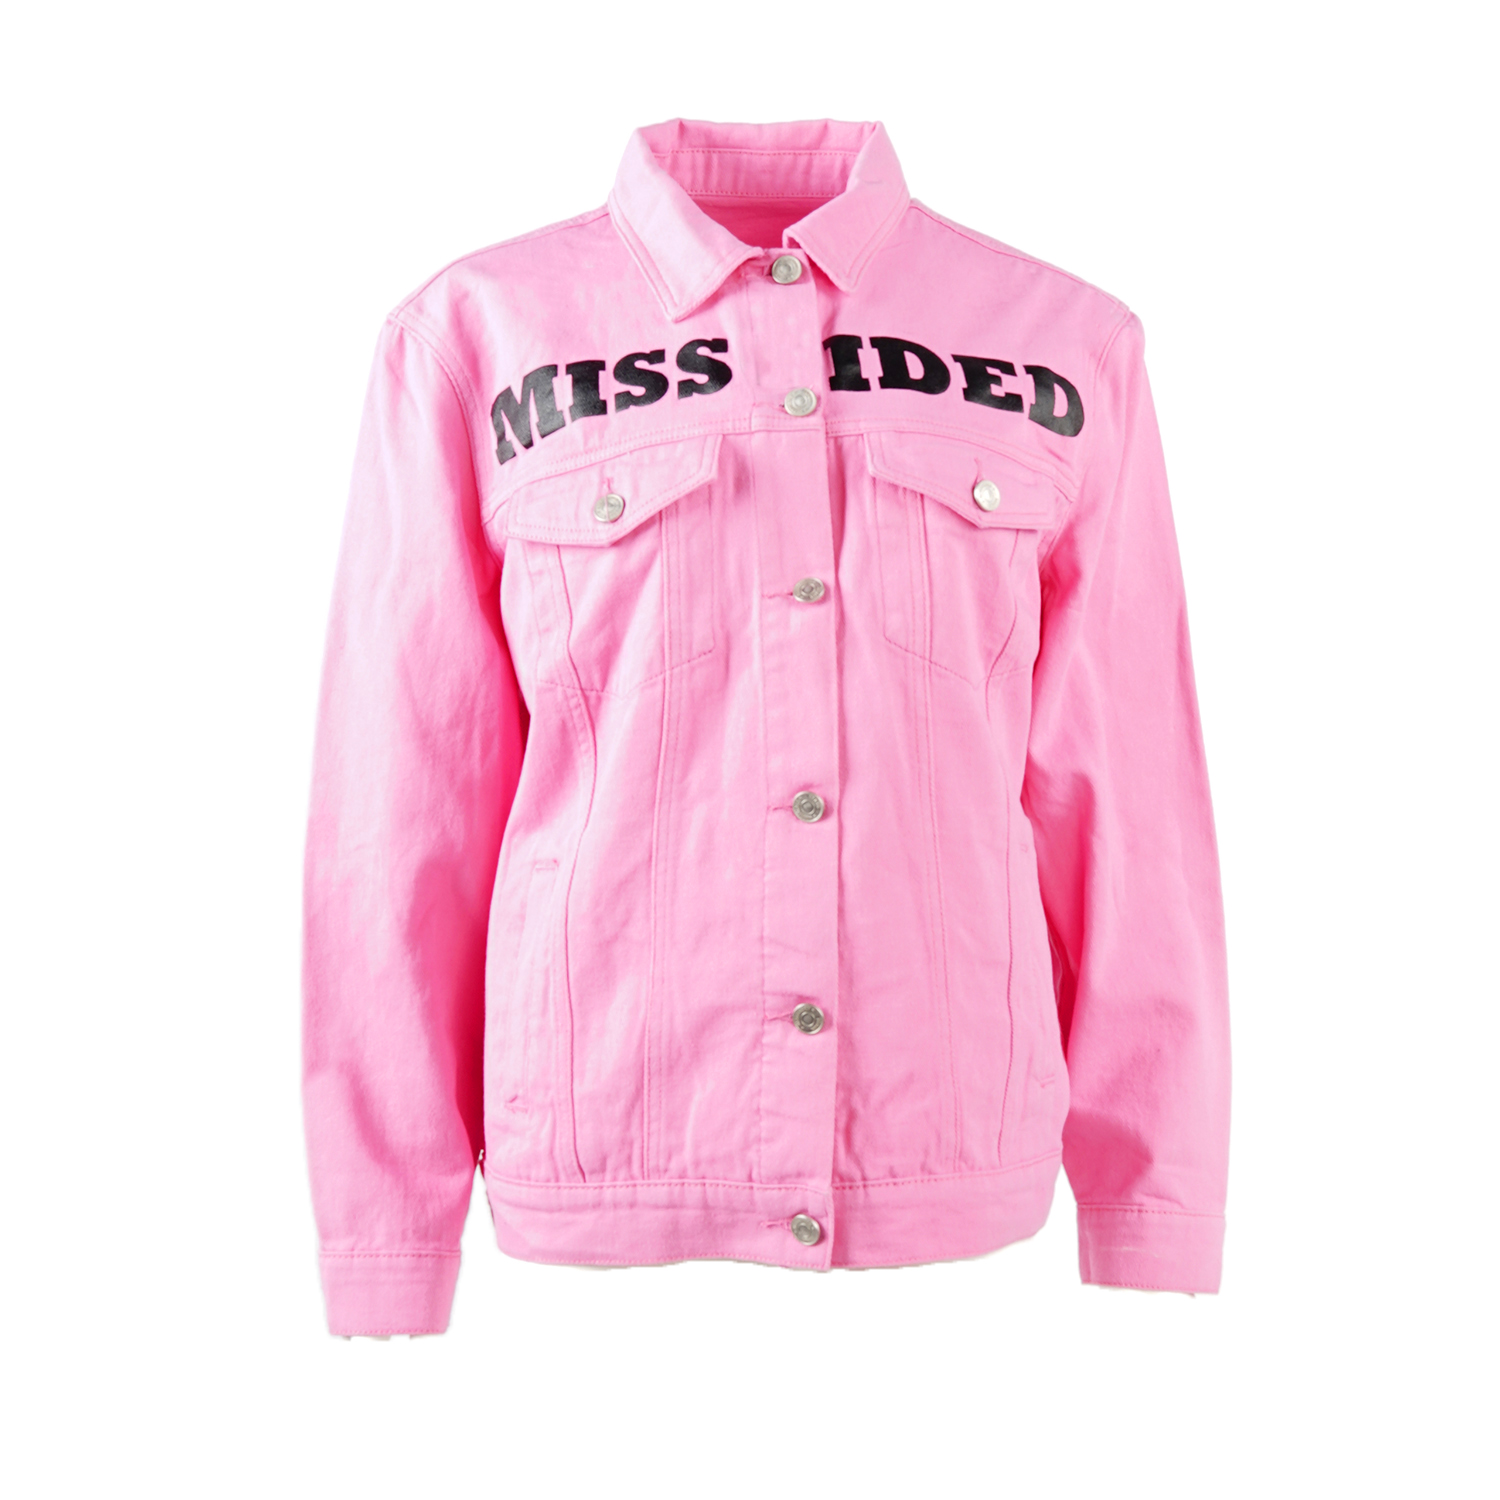 SKYKINGDOM hot fashion style lady jacket print letter pink autumn winter jacket for women